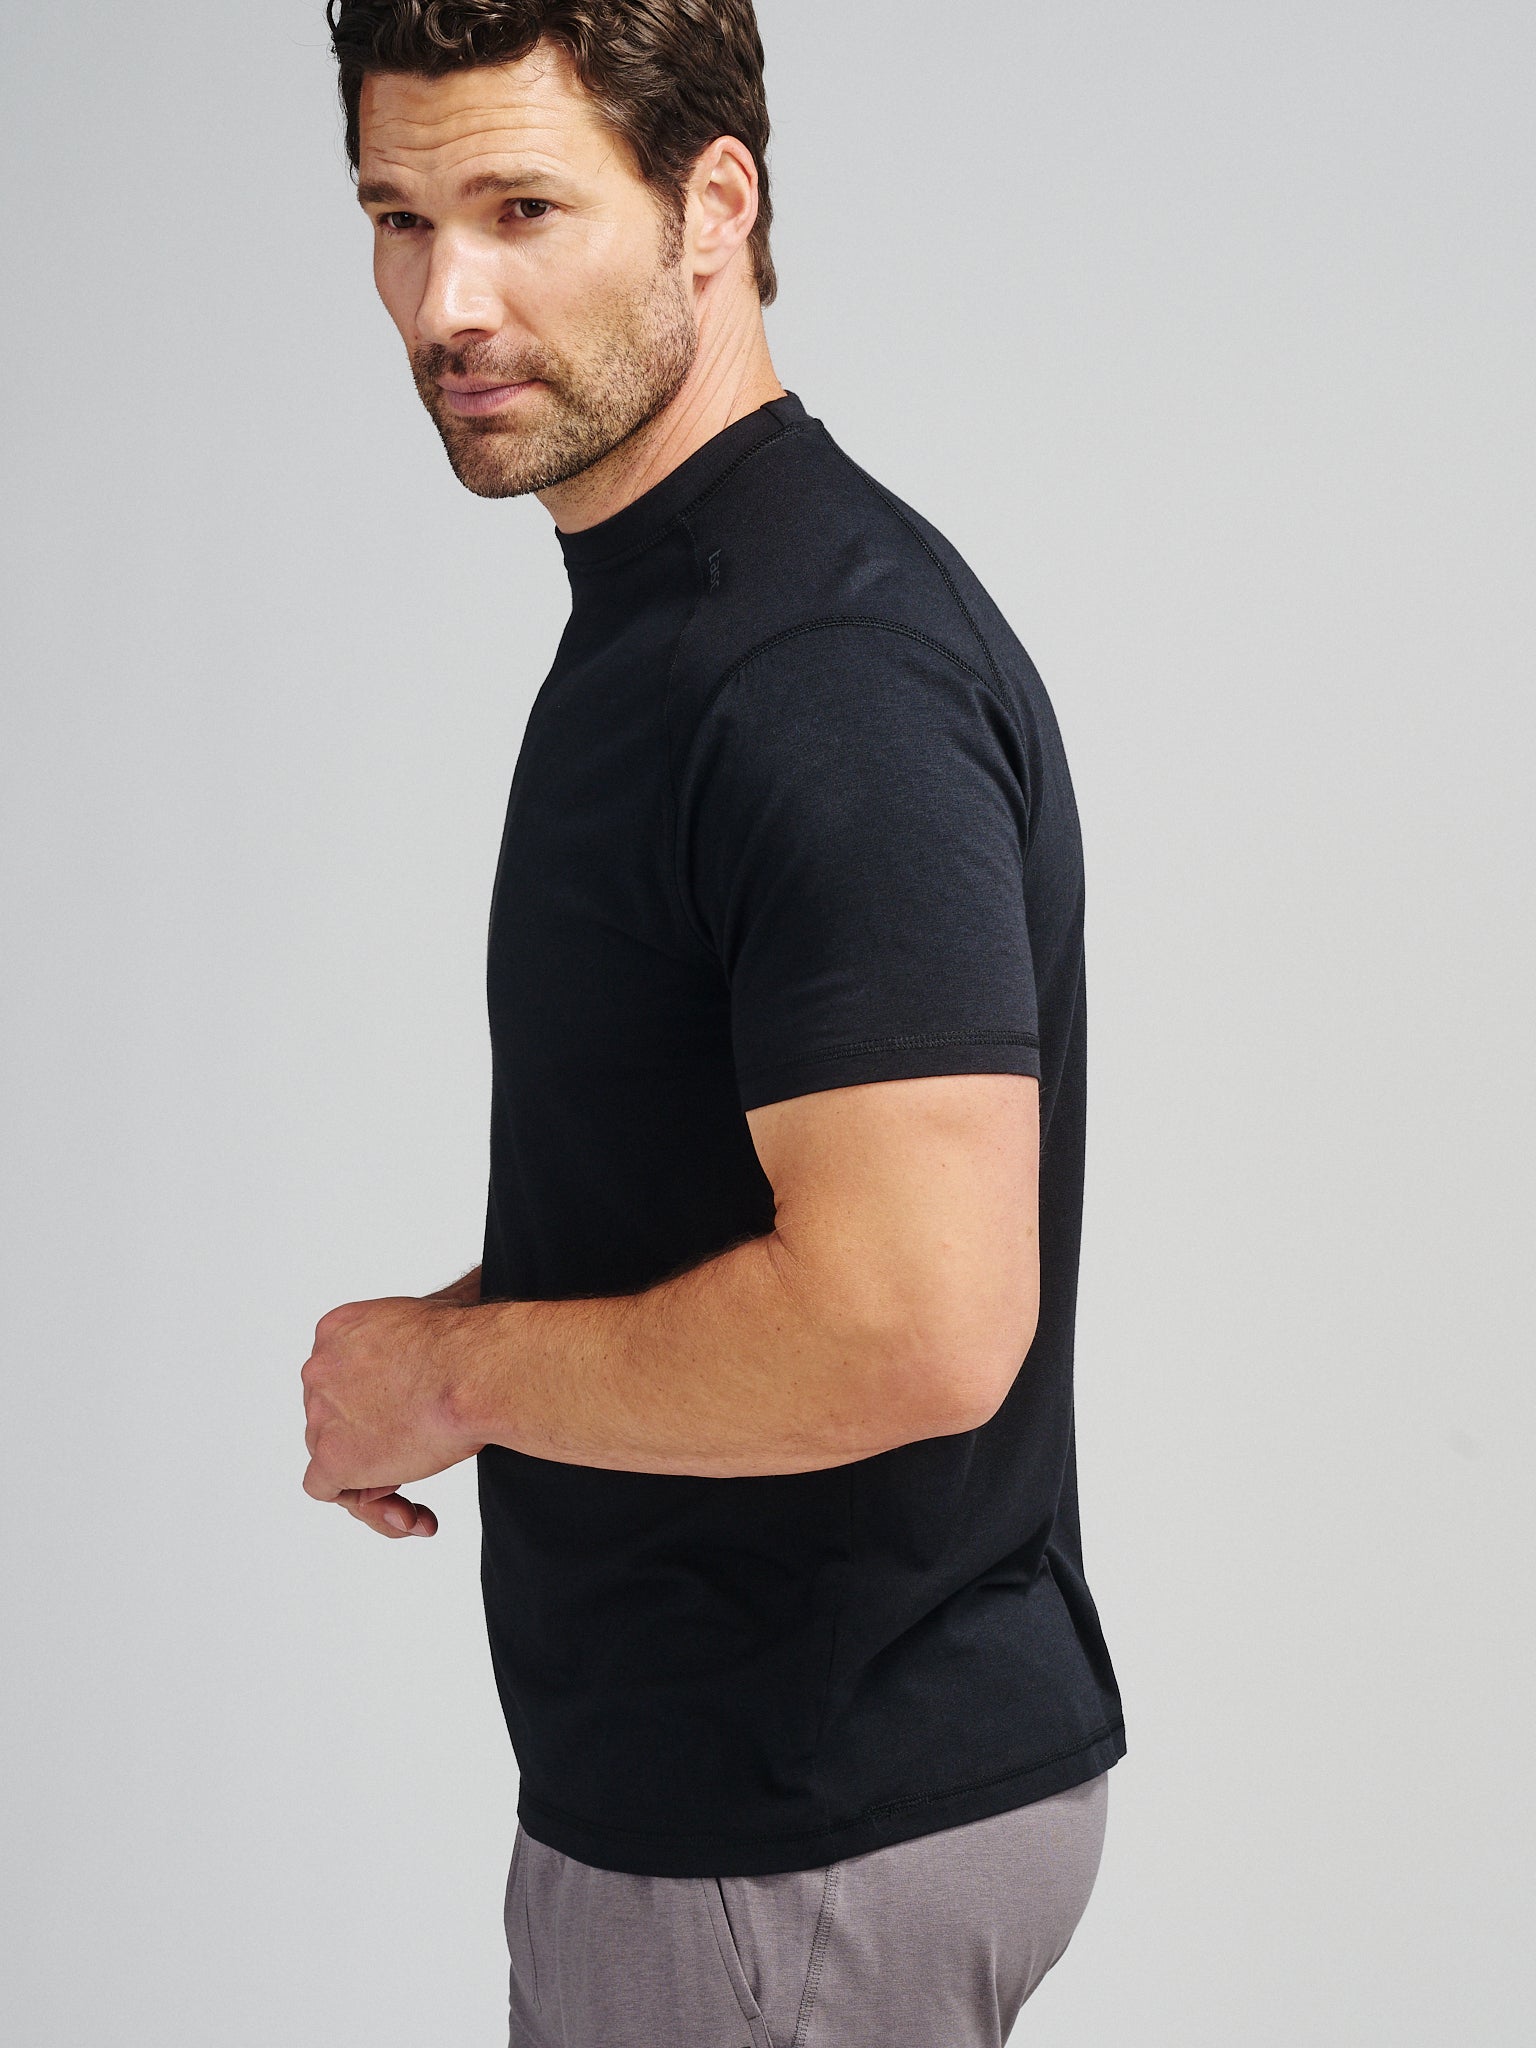 Men’s Tasc Performance T Shirt Short Sleeve Bamboo MOSOtech Size Small Black